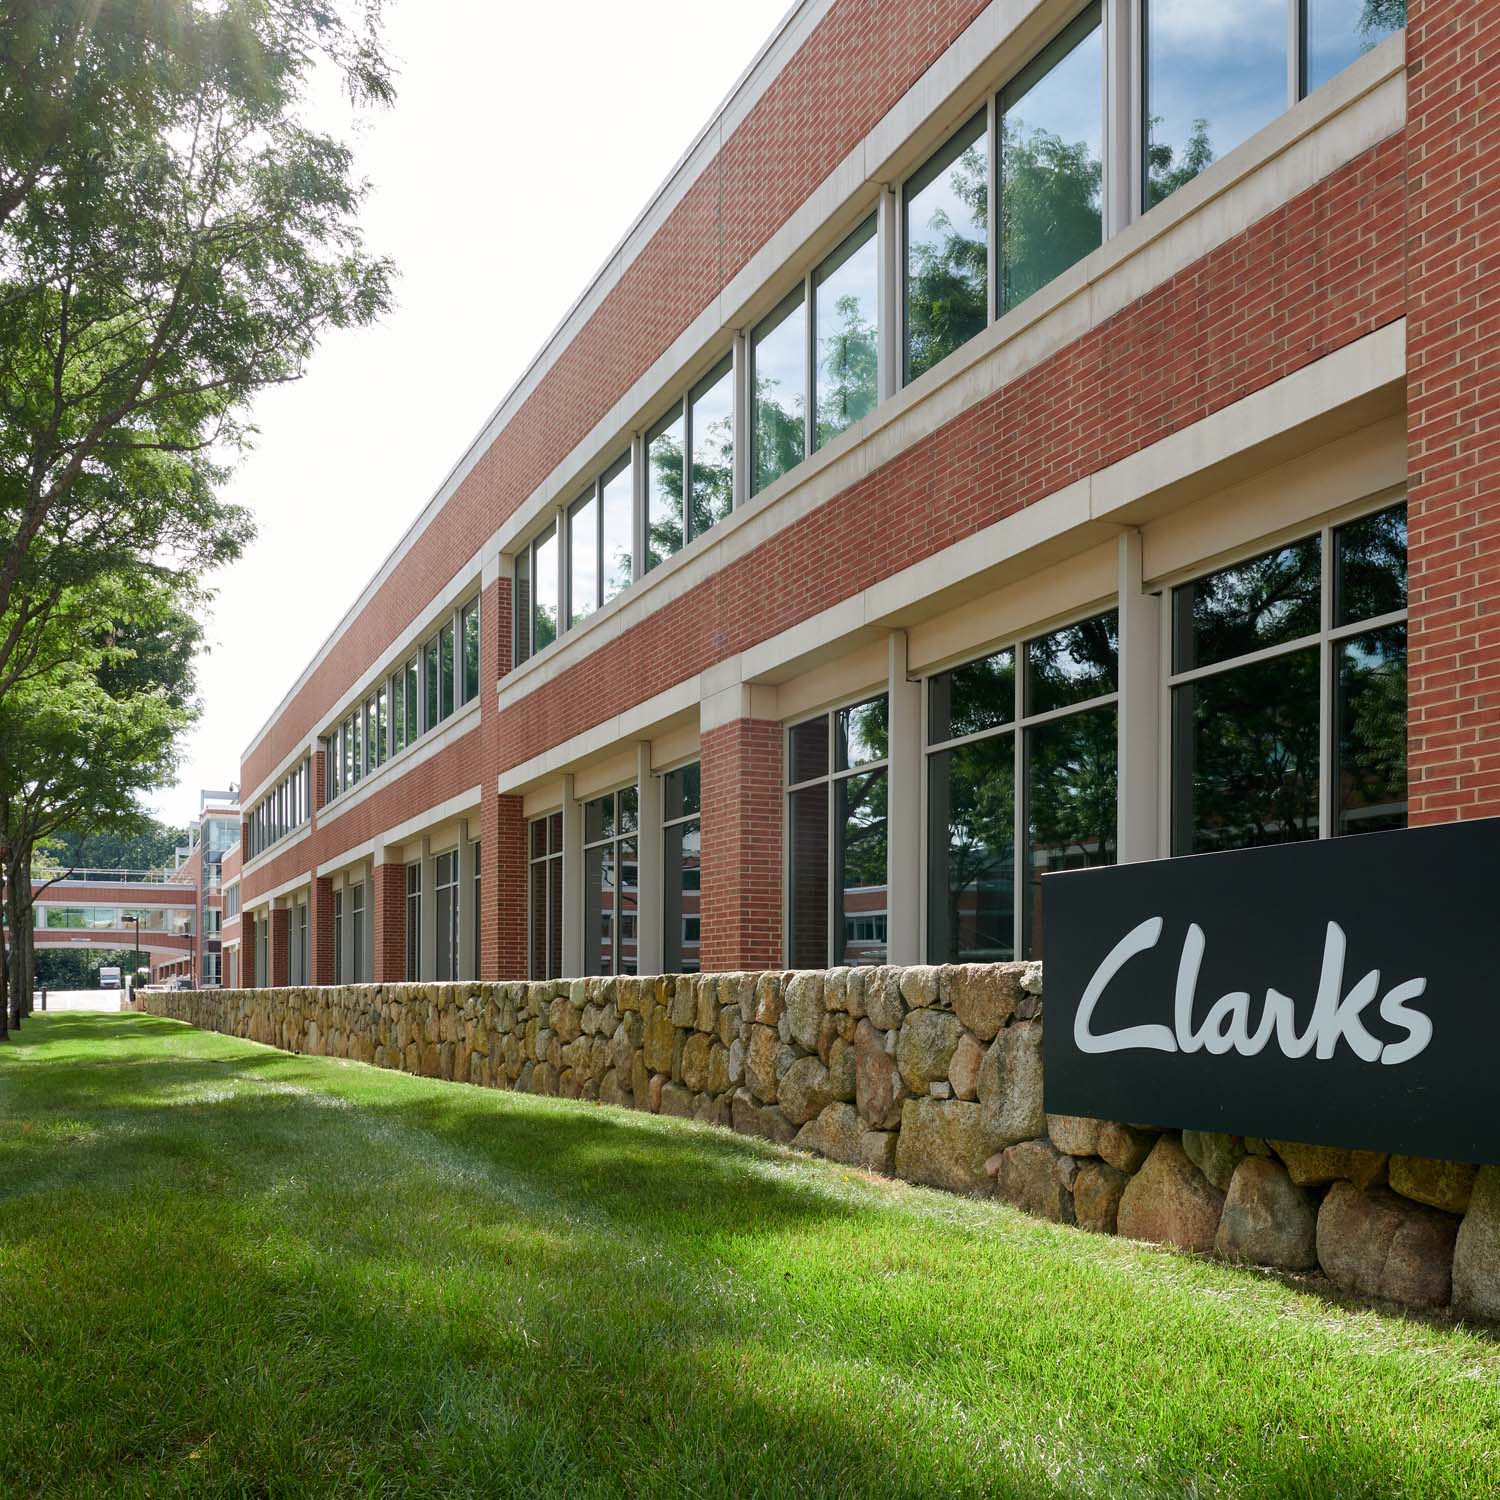 Clarks Jobs - Careers Website - Needham-clarks-office-building-v1_1500x1500px.jpg